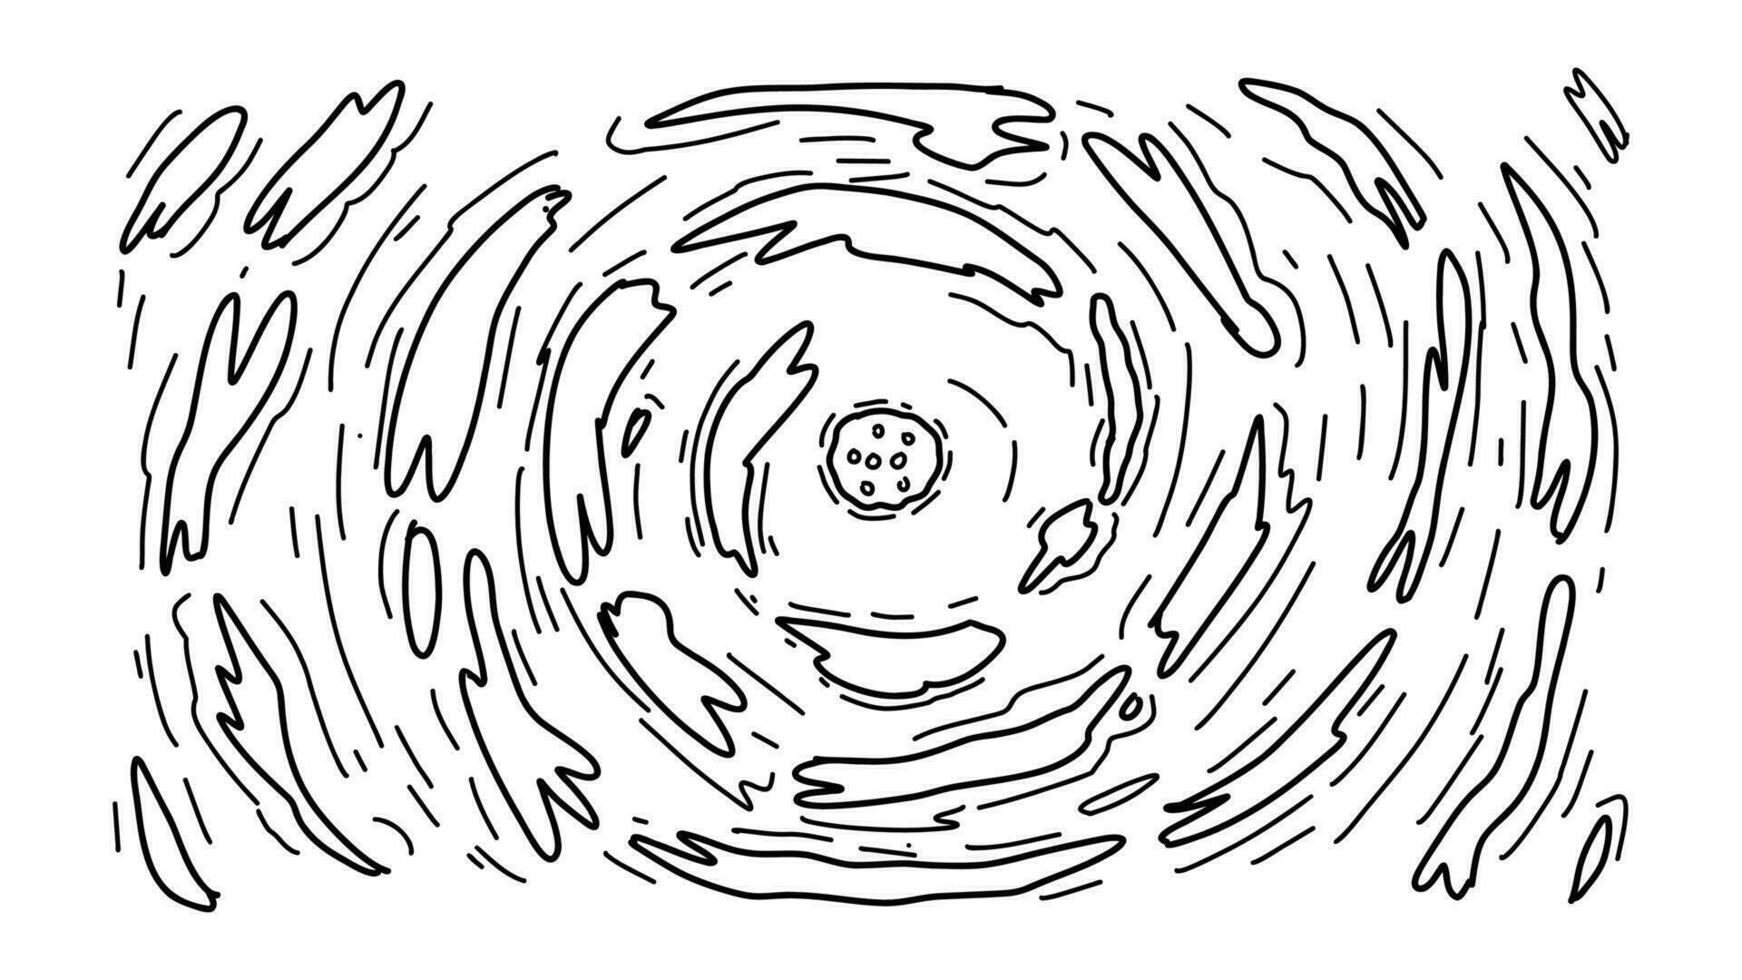 doodle hand drawn vortex comic style vector